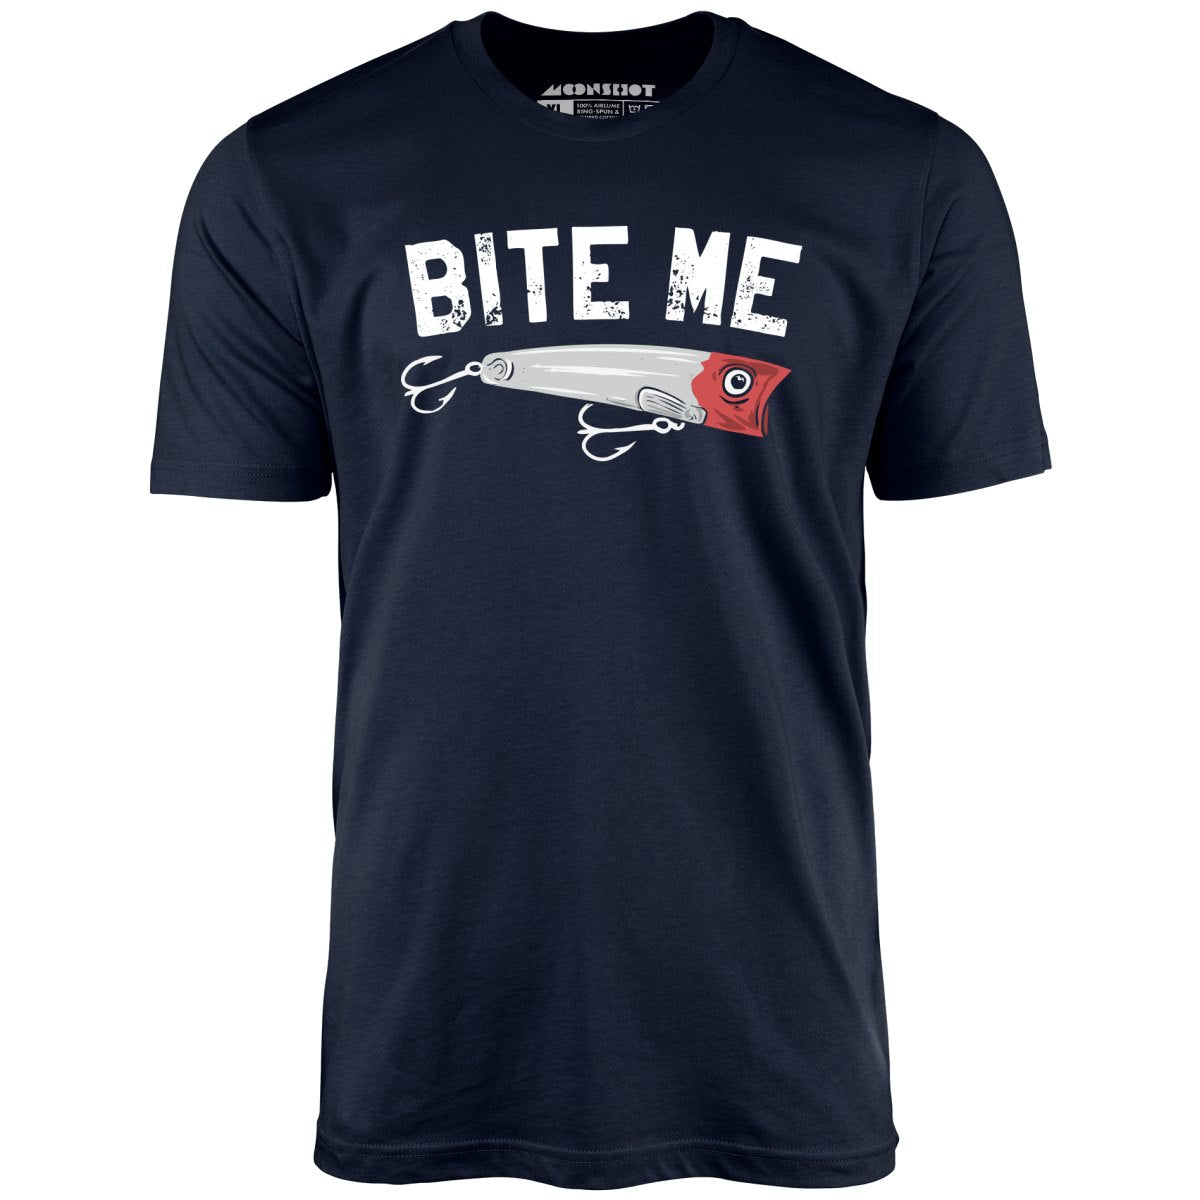 Bite Me - Unisex T-Shirt